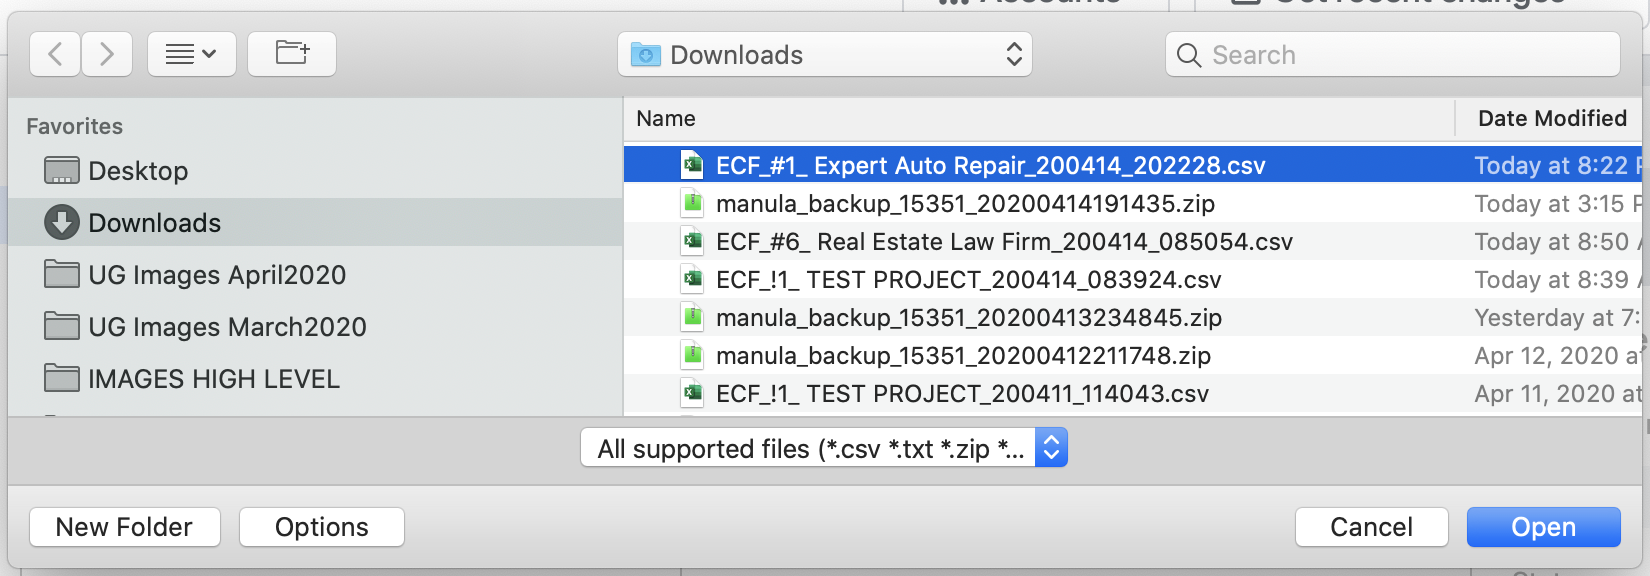 epf ecr file format in excel download 2018